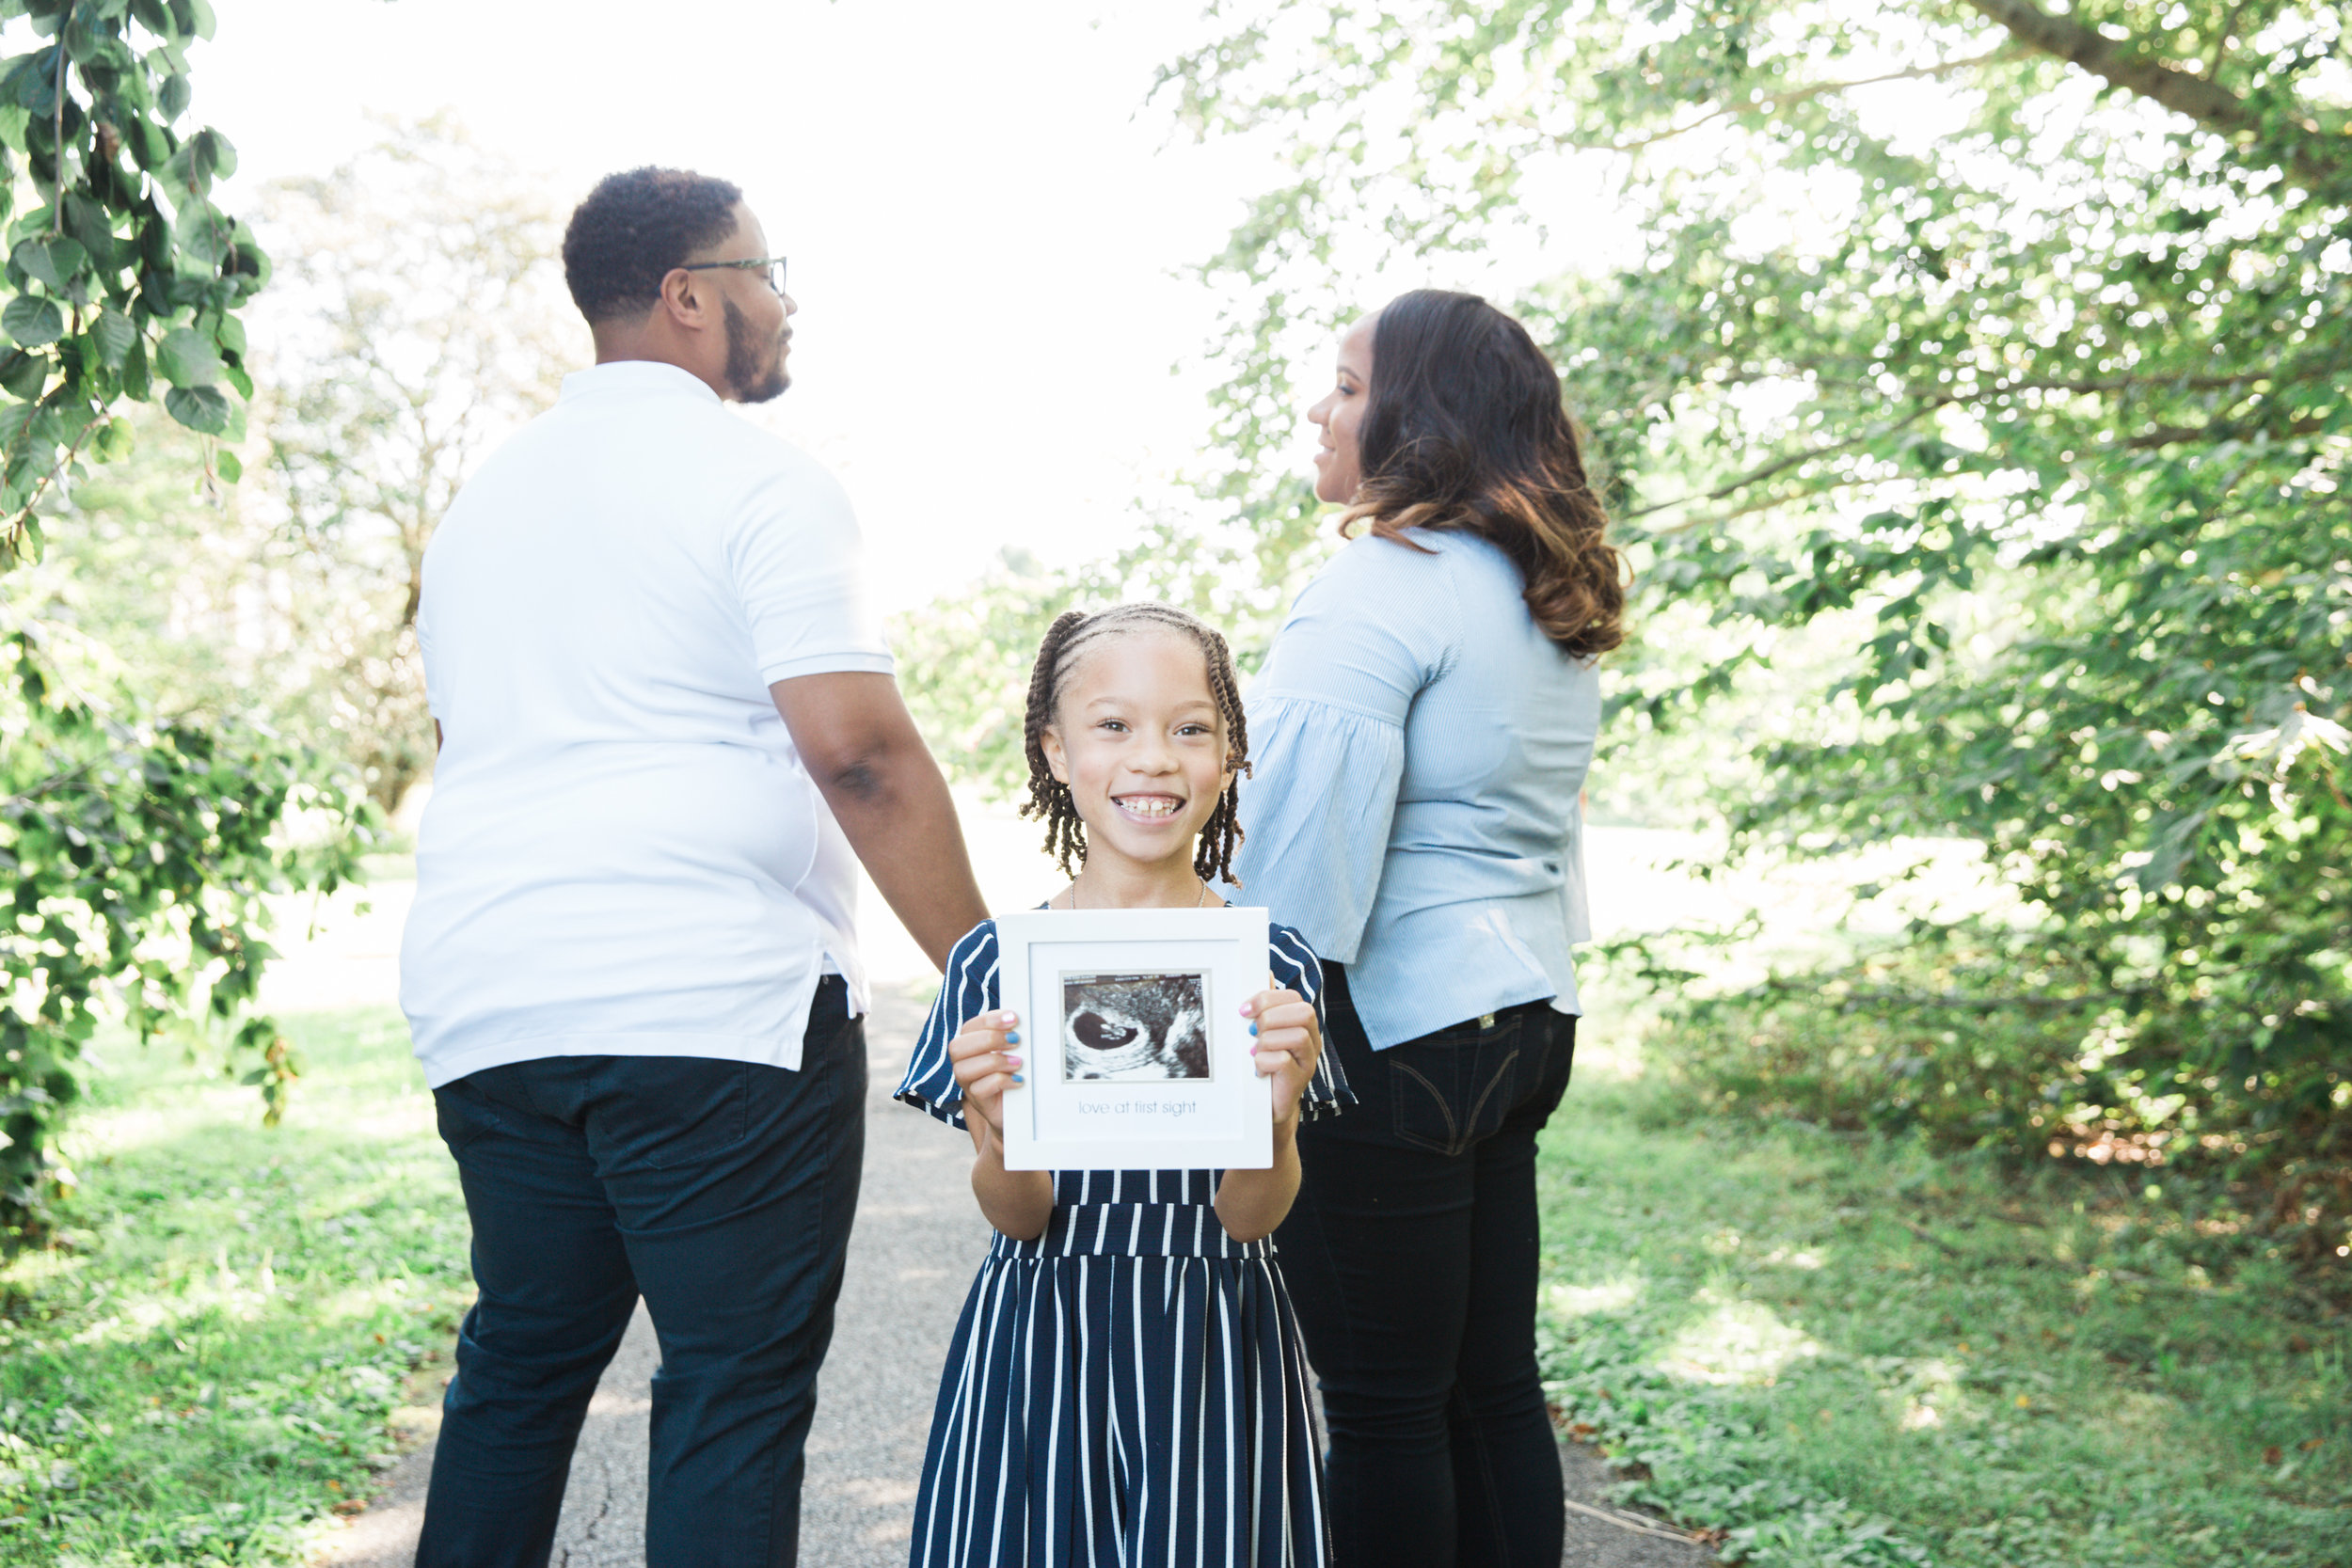 Baltimore Creative Pregnancy Announcement at Cylburn Arboretum Baltimore Family Photographer Megapixels Media Photography -4.jpg